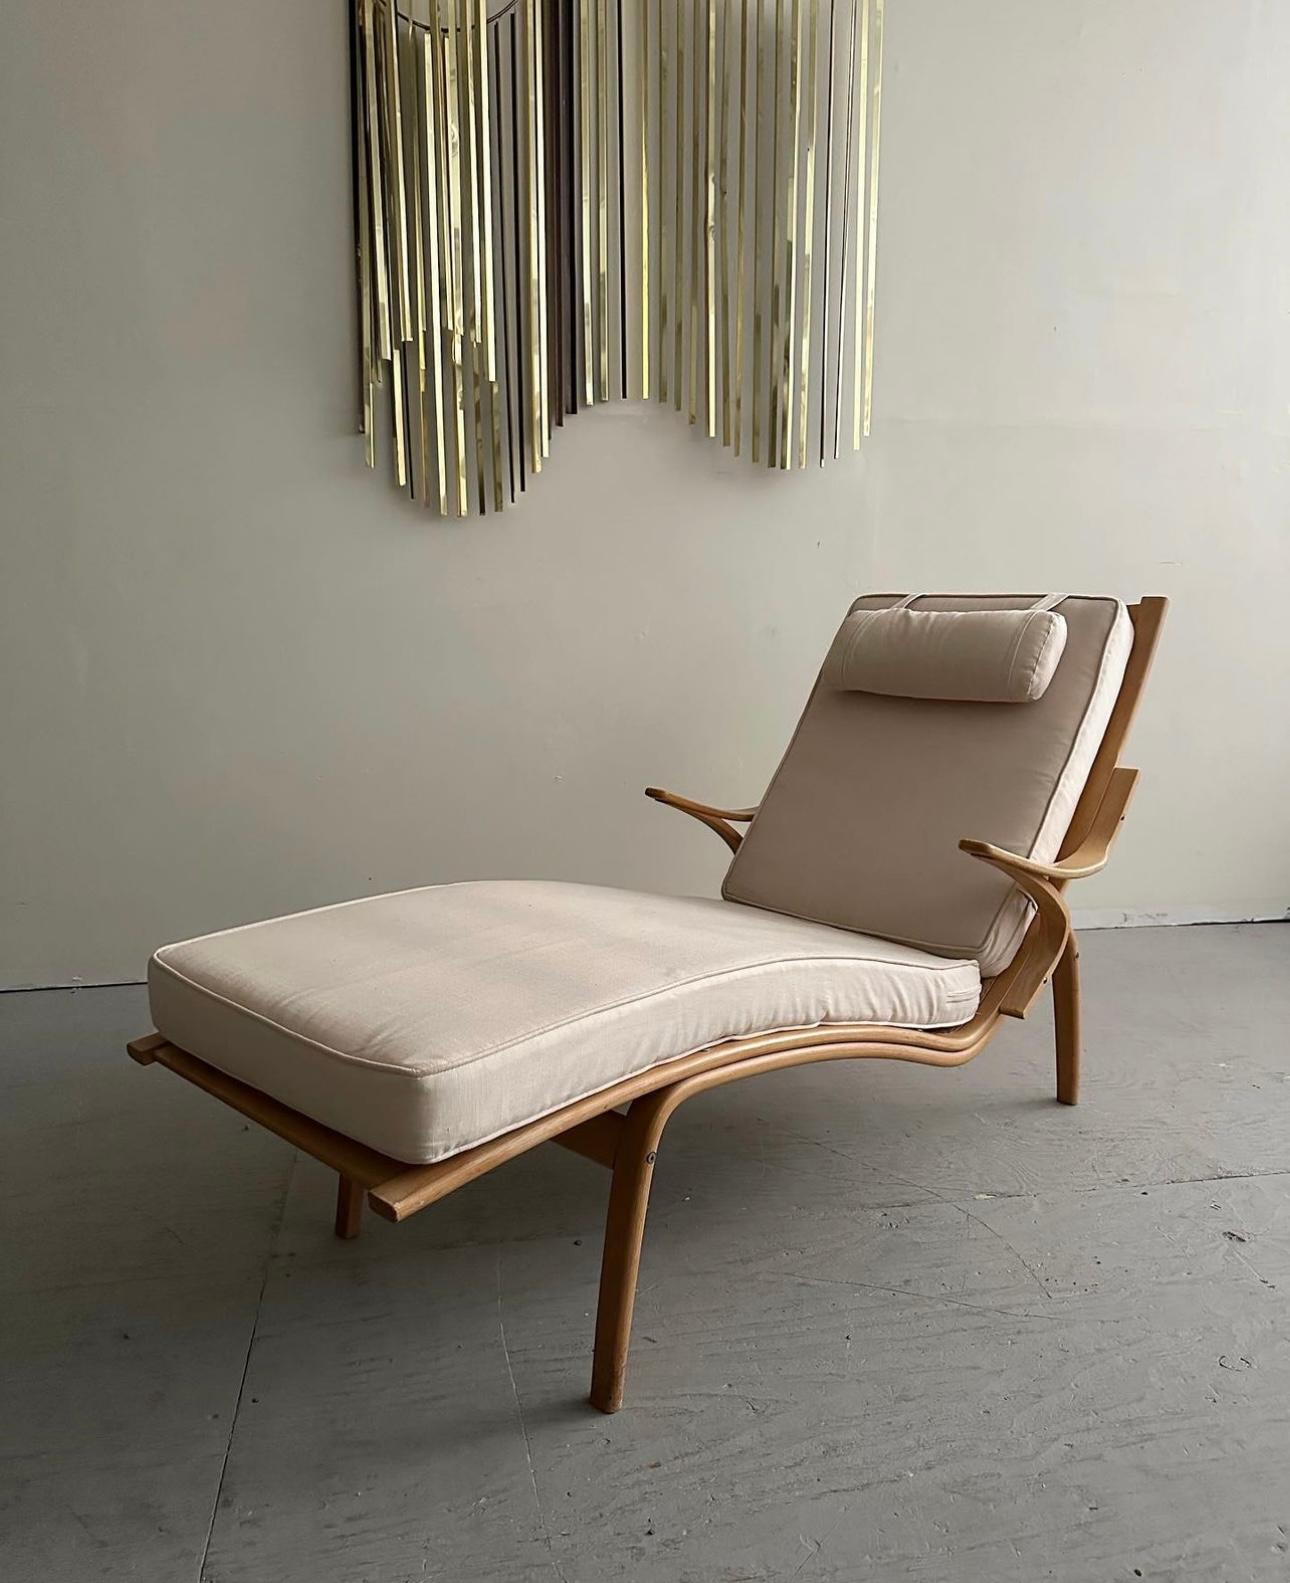 Swedish Mid-Century Modern Bentwood Chaise Lounge Designed by Alvar Aalto for Artek